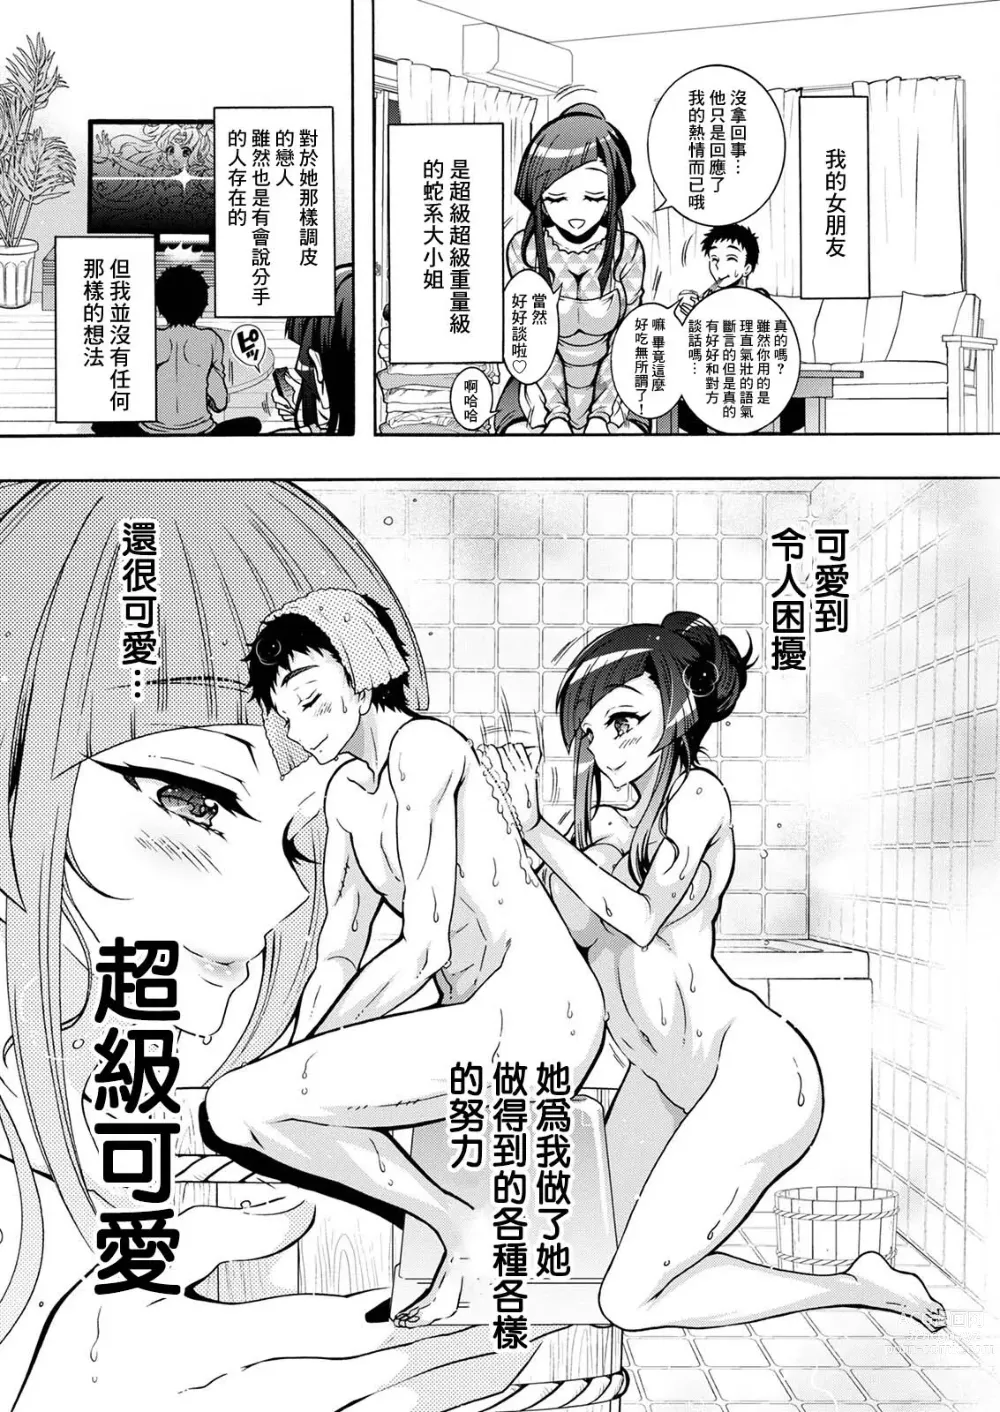 Page 6 of manga Youkai Ecchicchi Ch.6